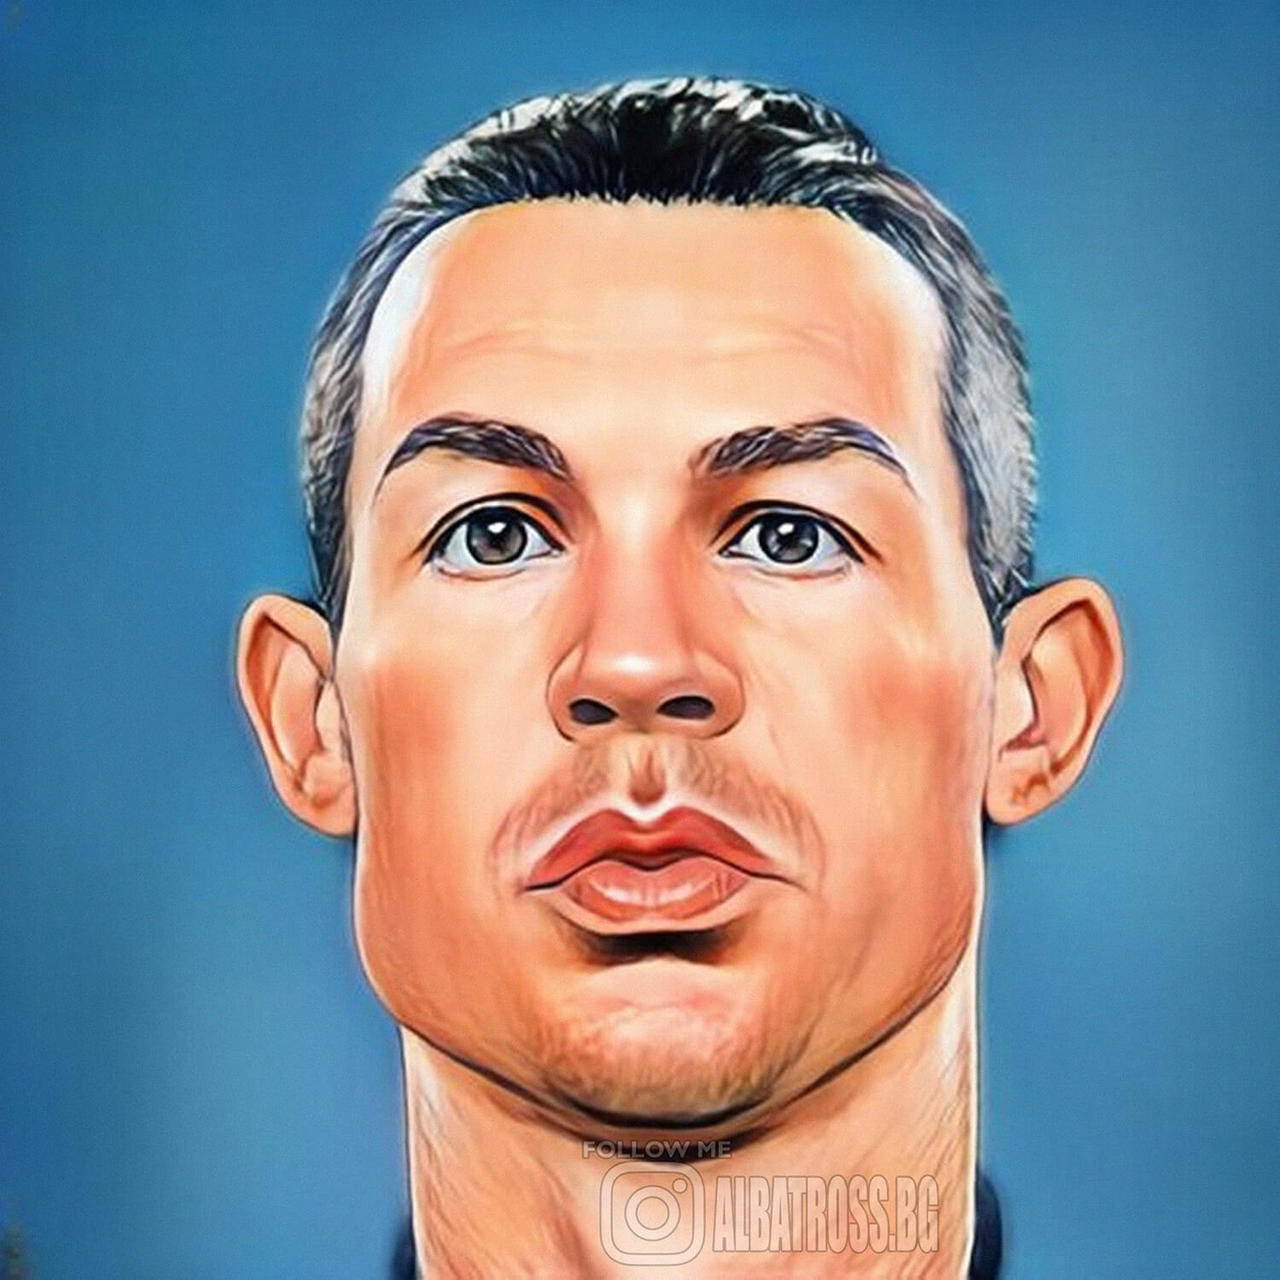 Cristiano Ronaldo 20 by albatrossbg on DeviantArt